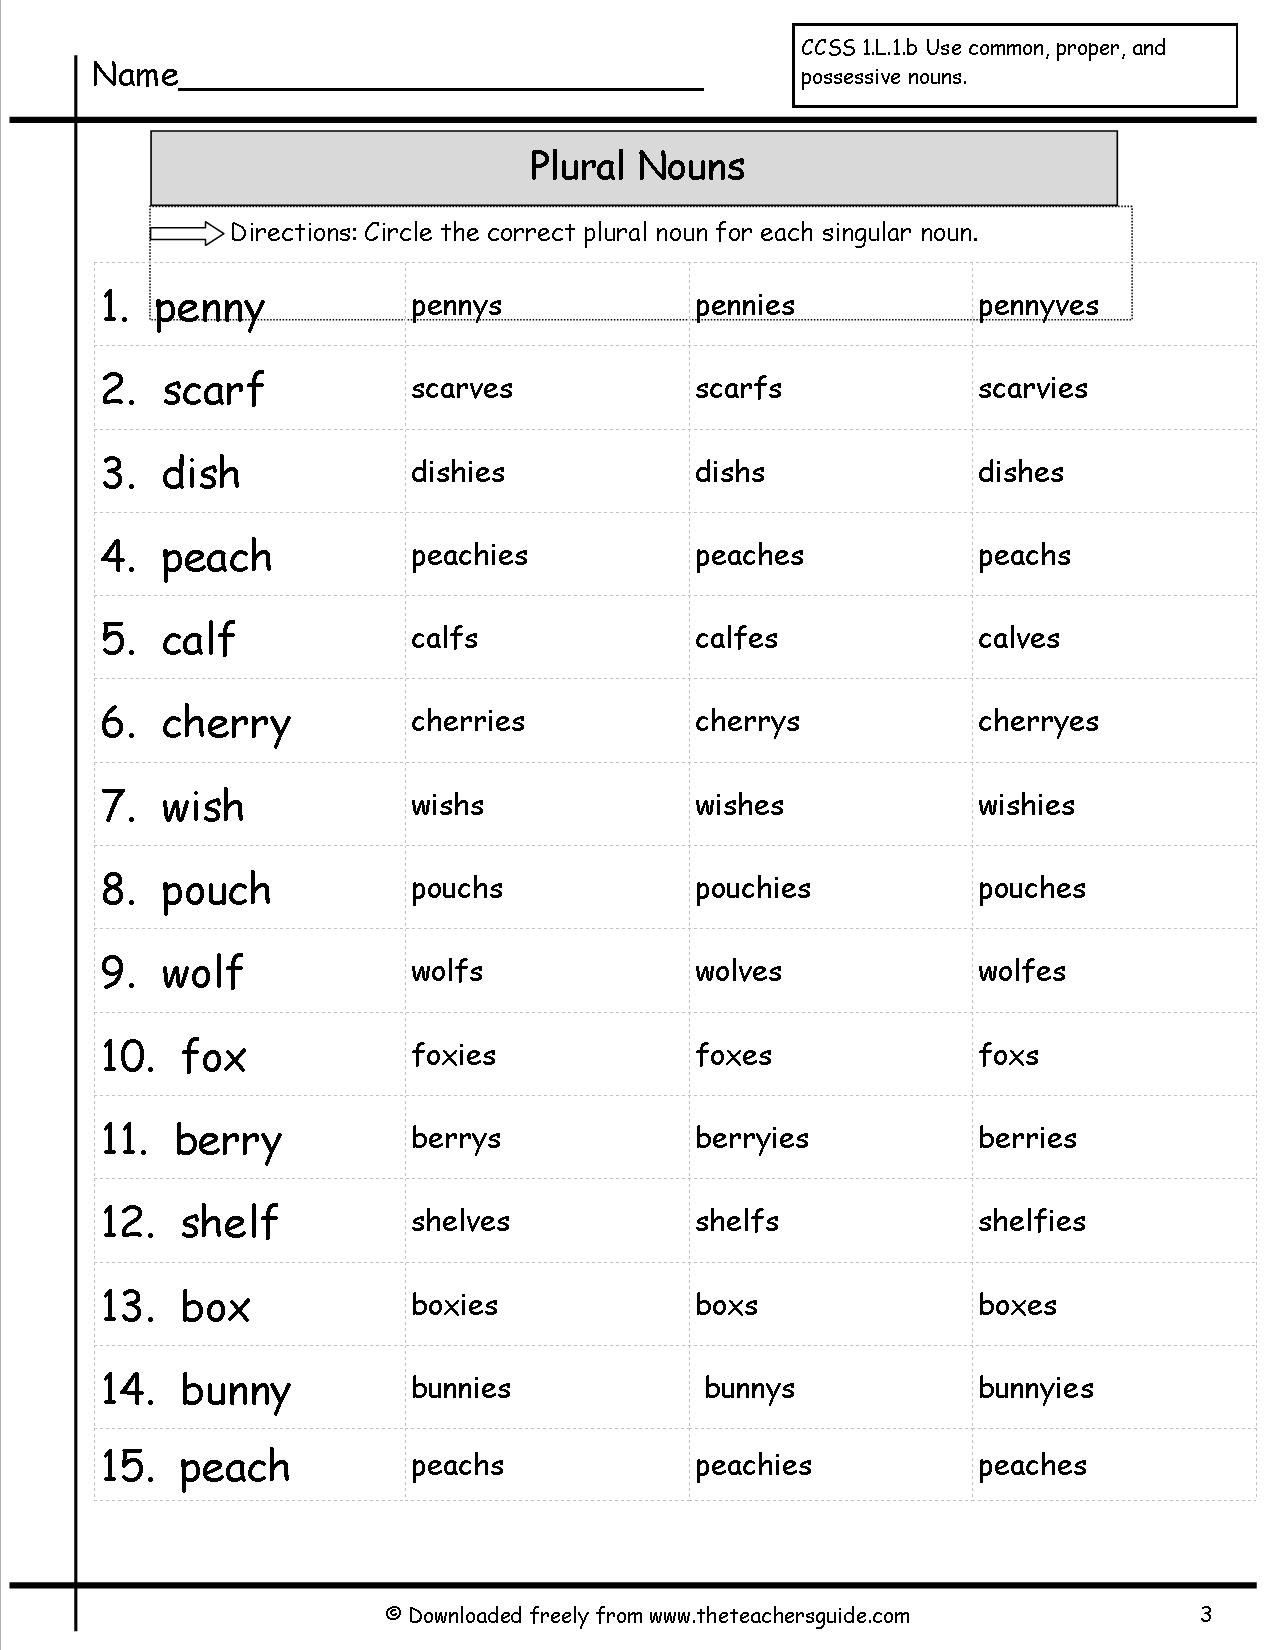 plural-nouns-ies-worksheet